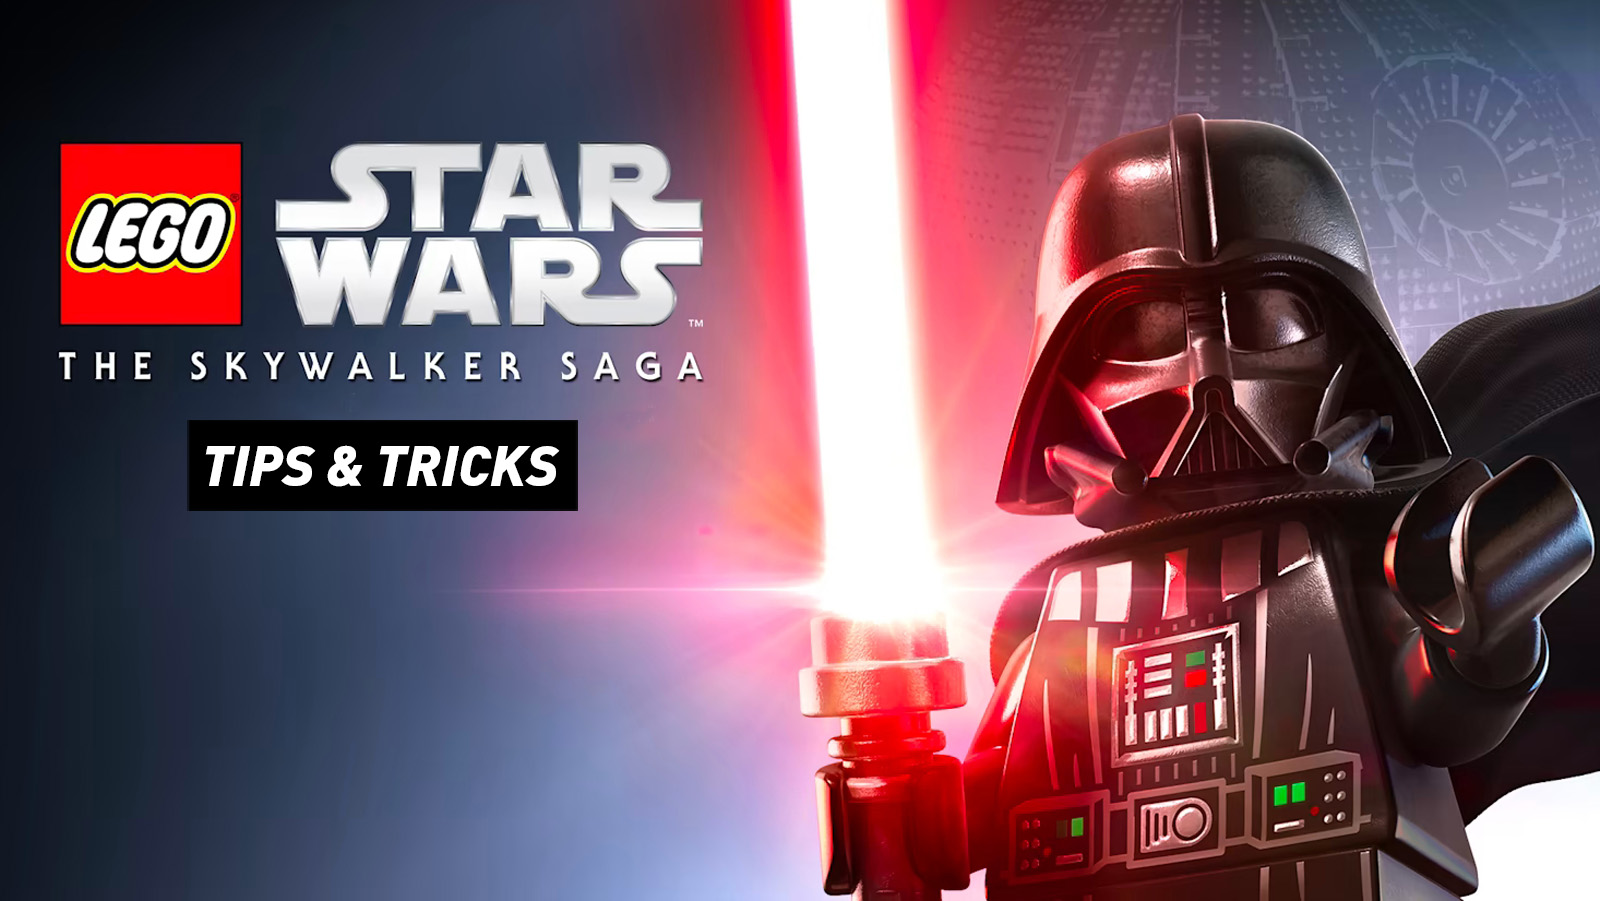 LEGO Star Wars: The Skywalker Saga – Tips